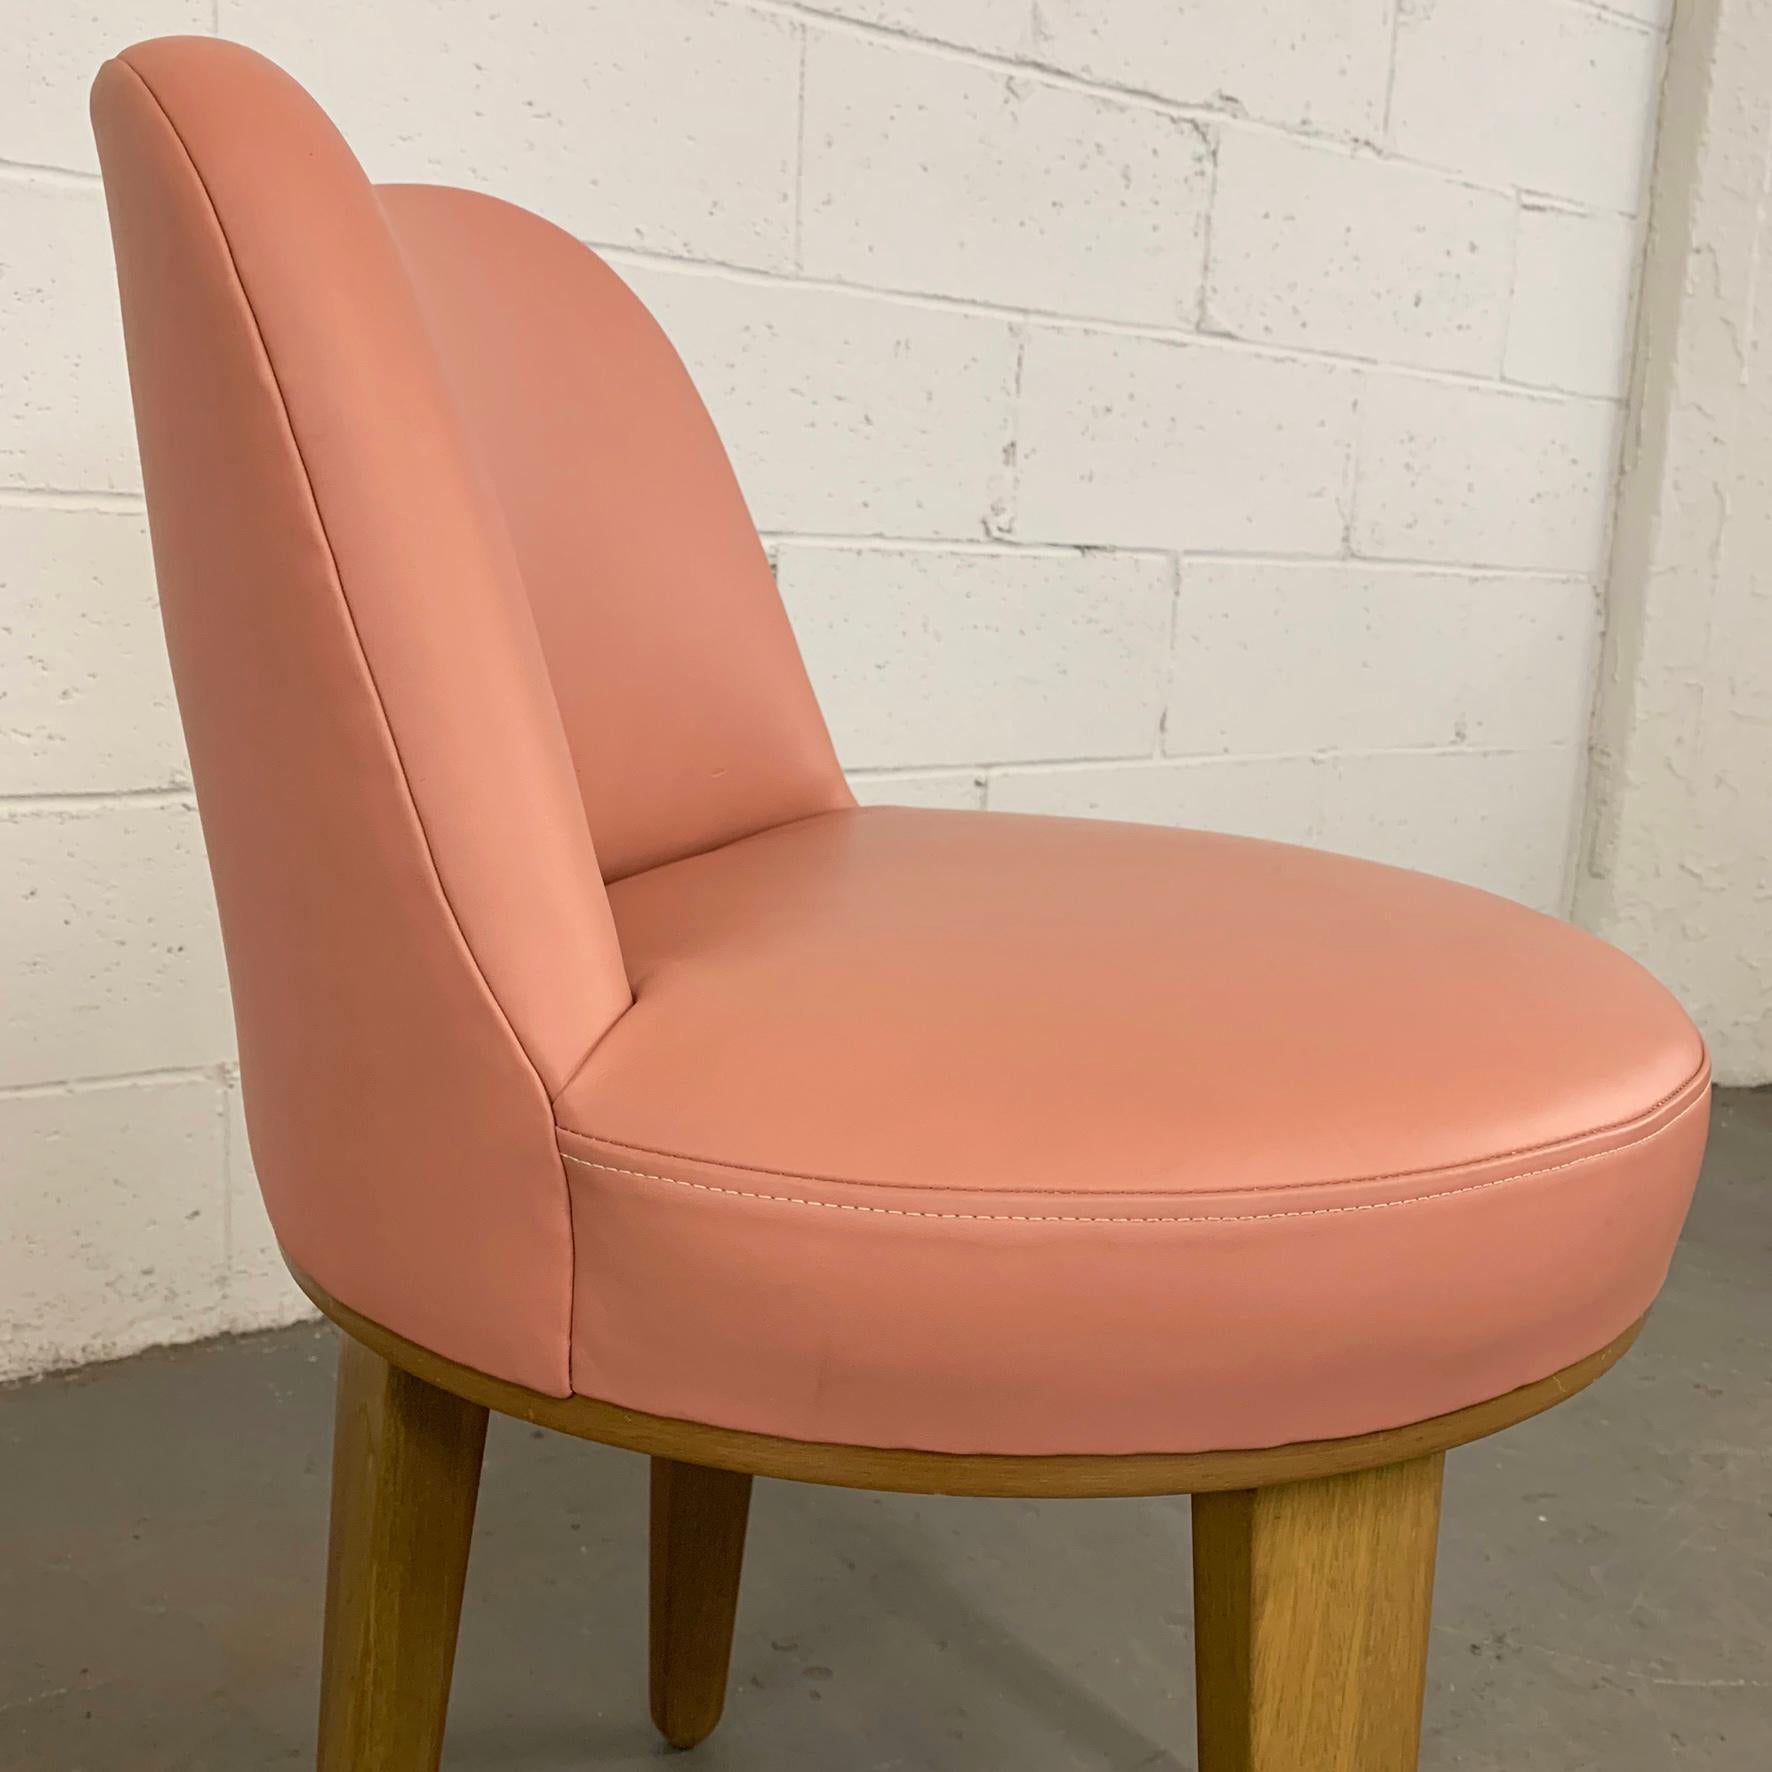 American Edward Wormley for Dunbar Leather Swivel Vanity Chair